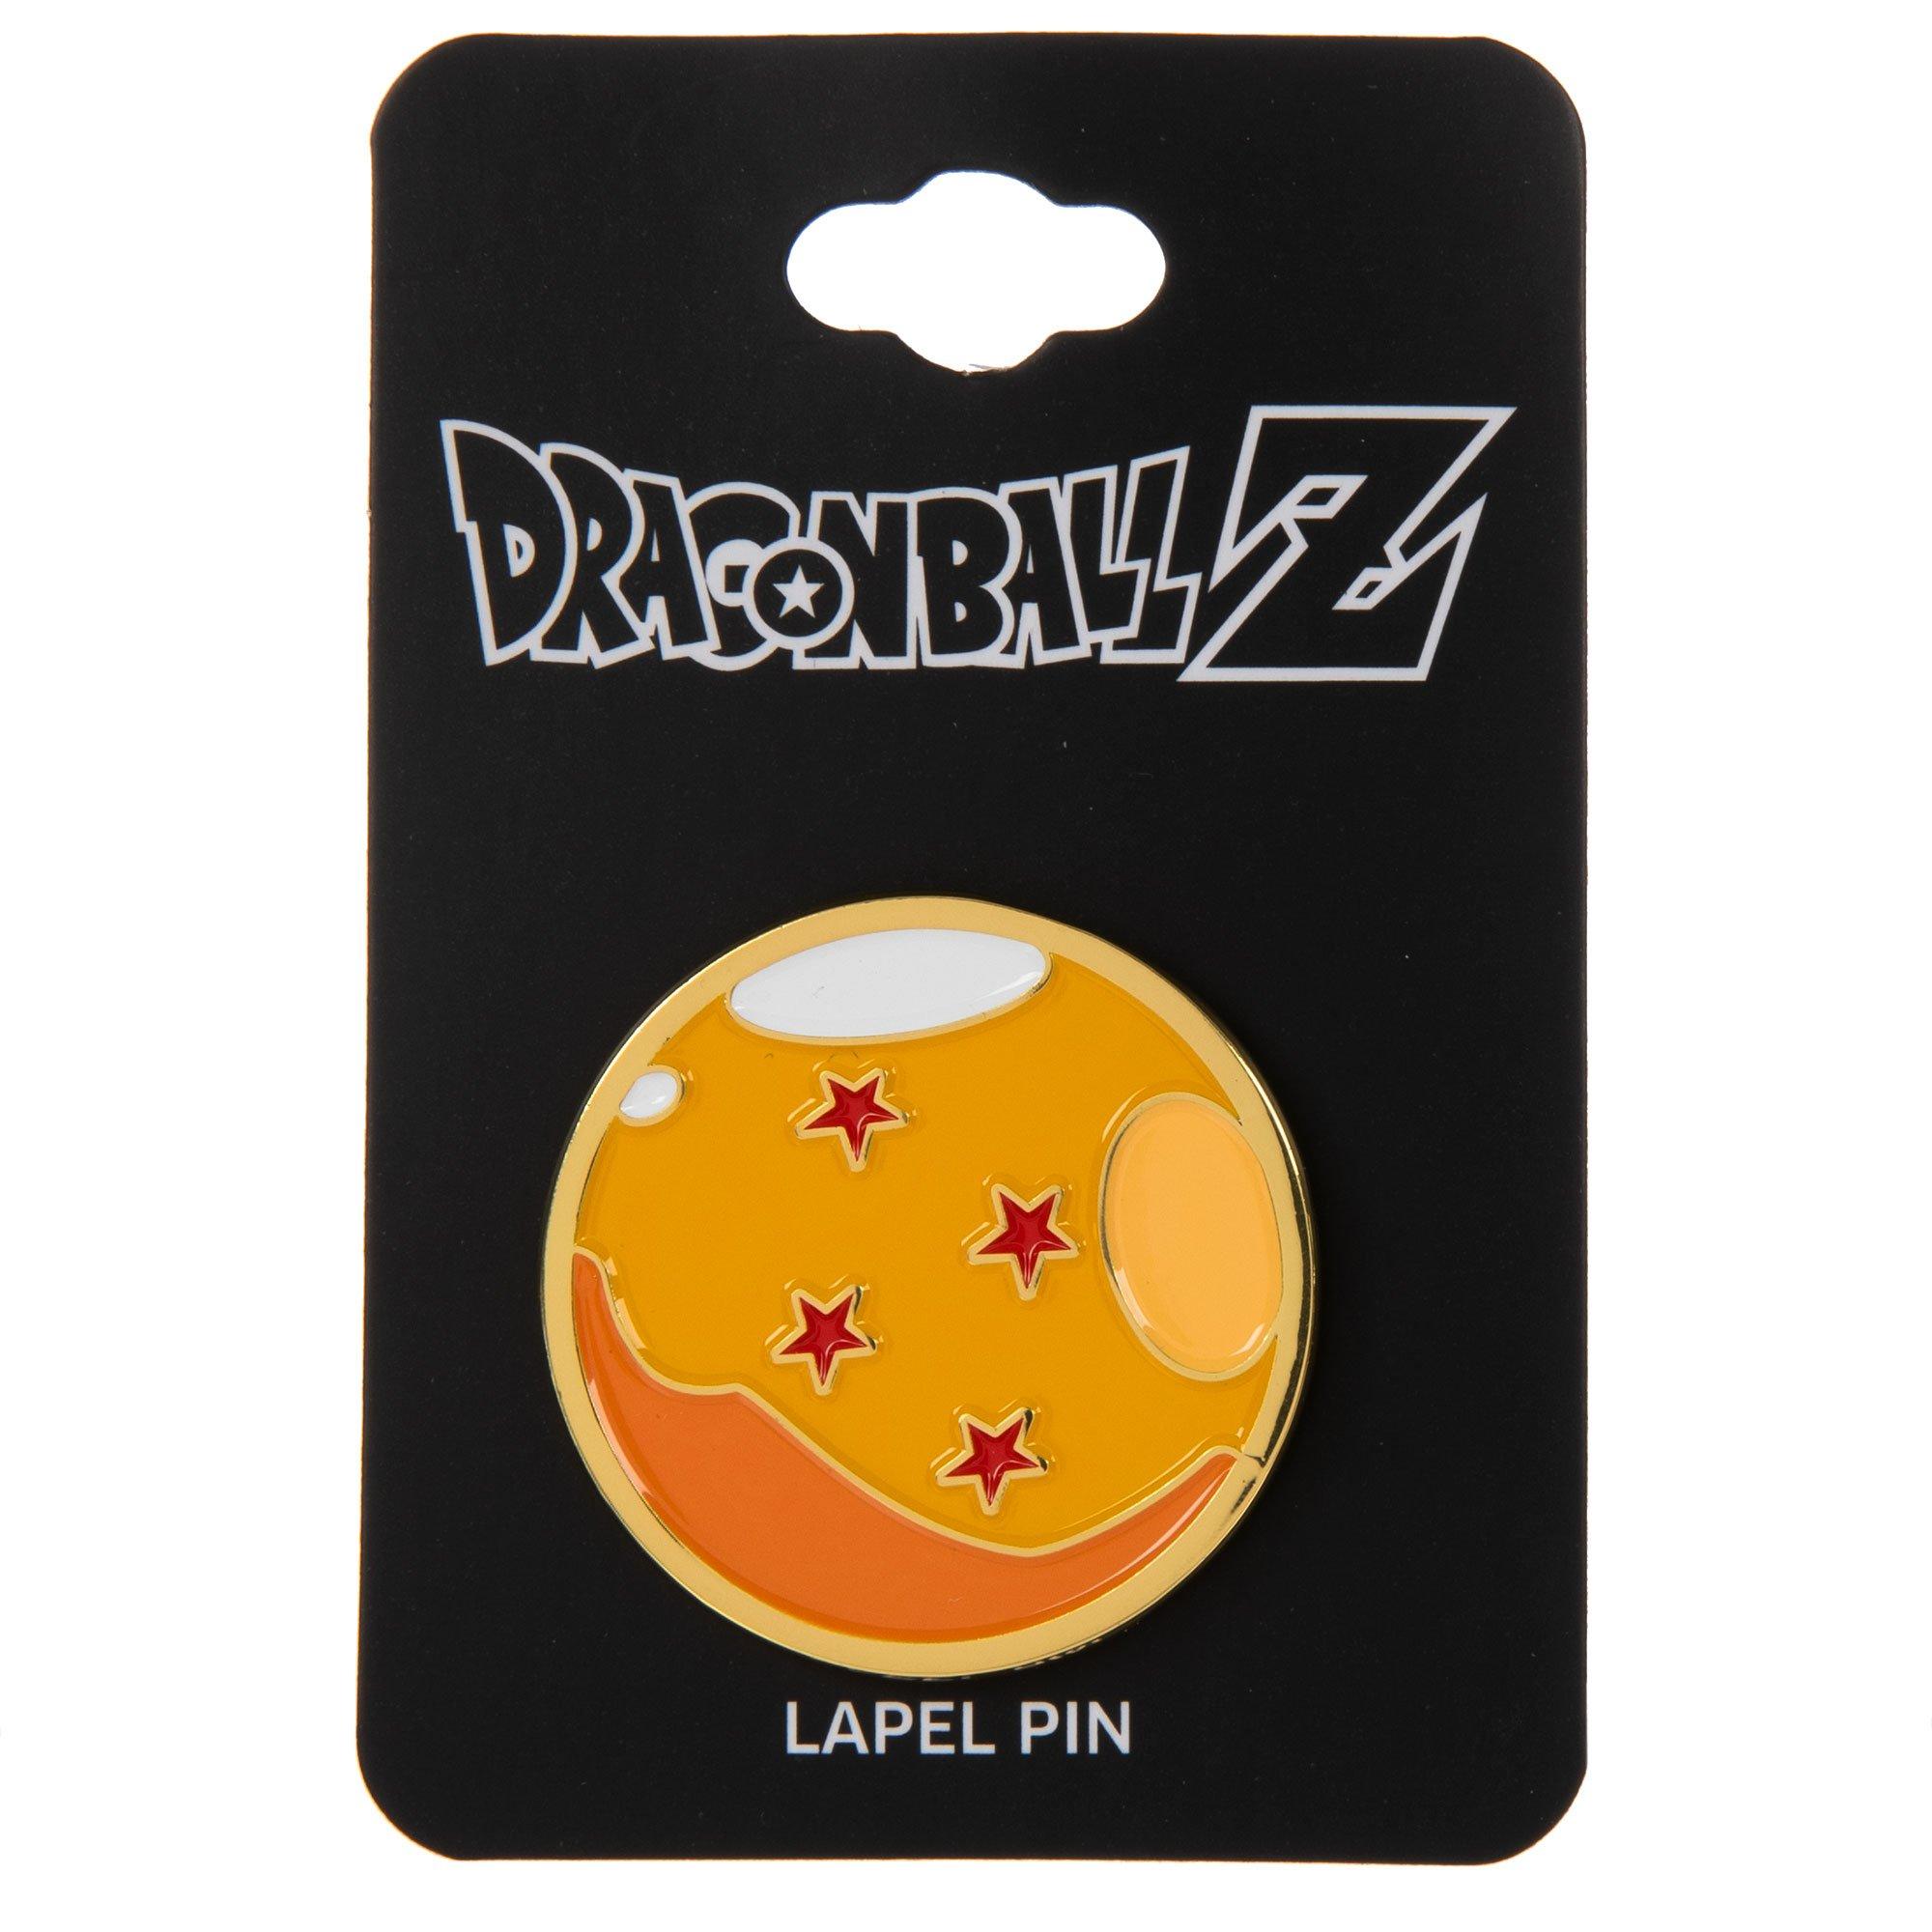 Pin on Dragon ball z